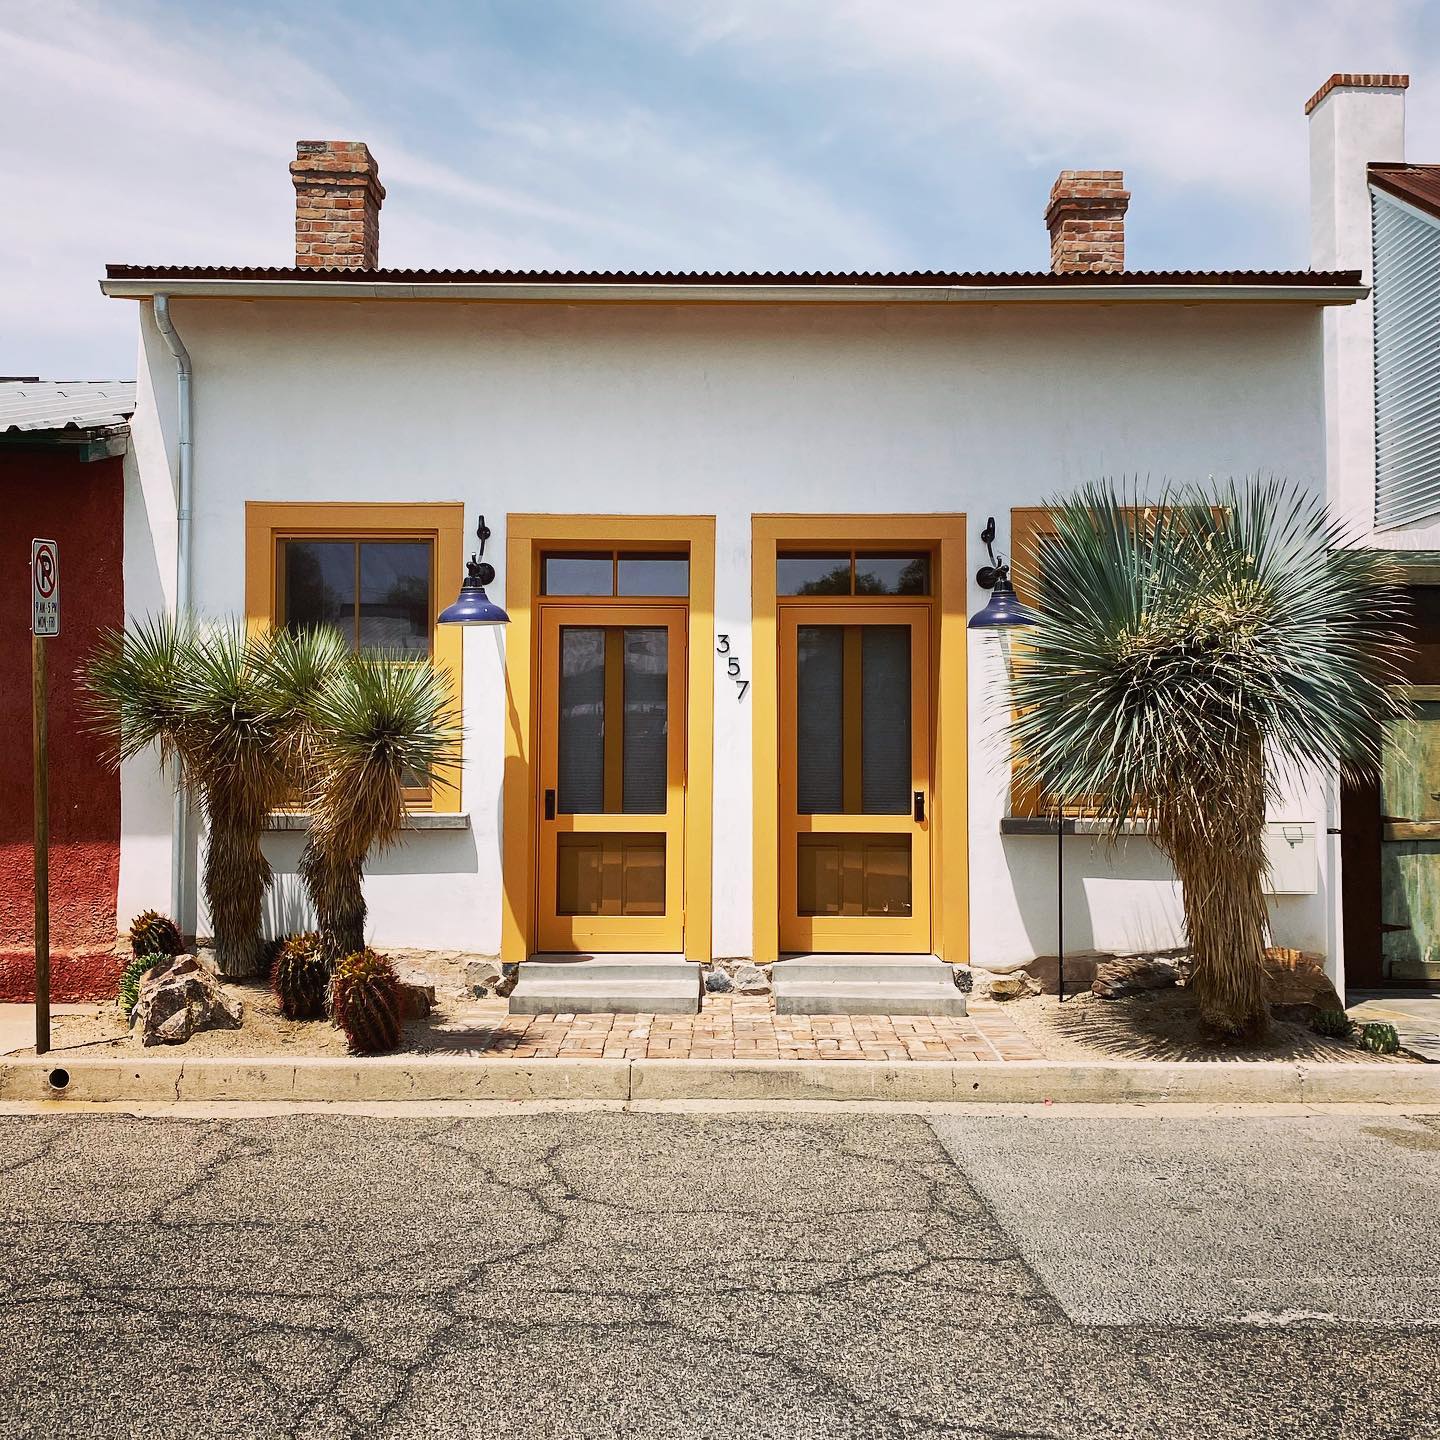 El Presidio white & yellow neighborhood house Tucson Photo via @thejennelltaylor